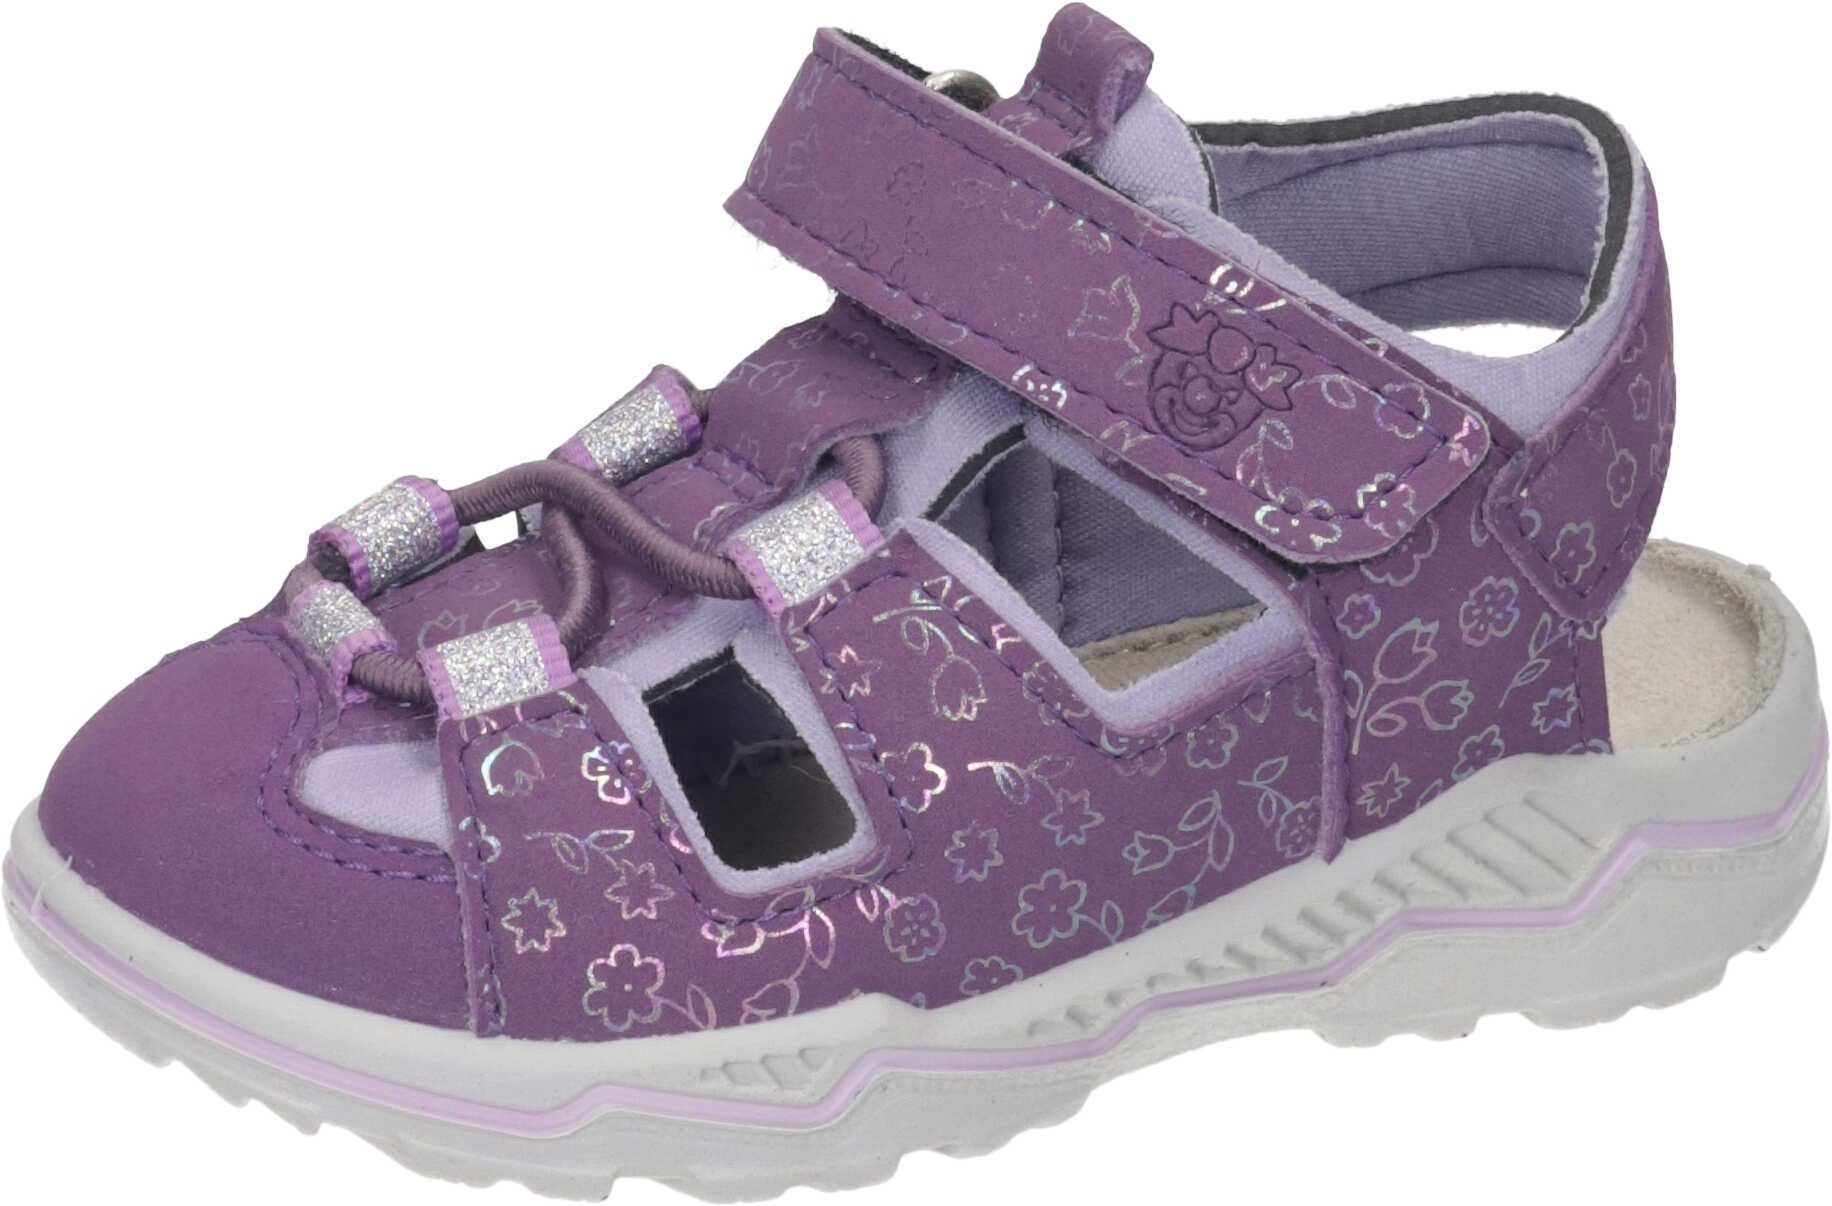 Synthetik/Textil Cassis/Lavendel Outdoorsandale Pepino Sandaletten aus